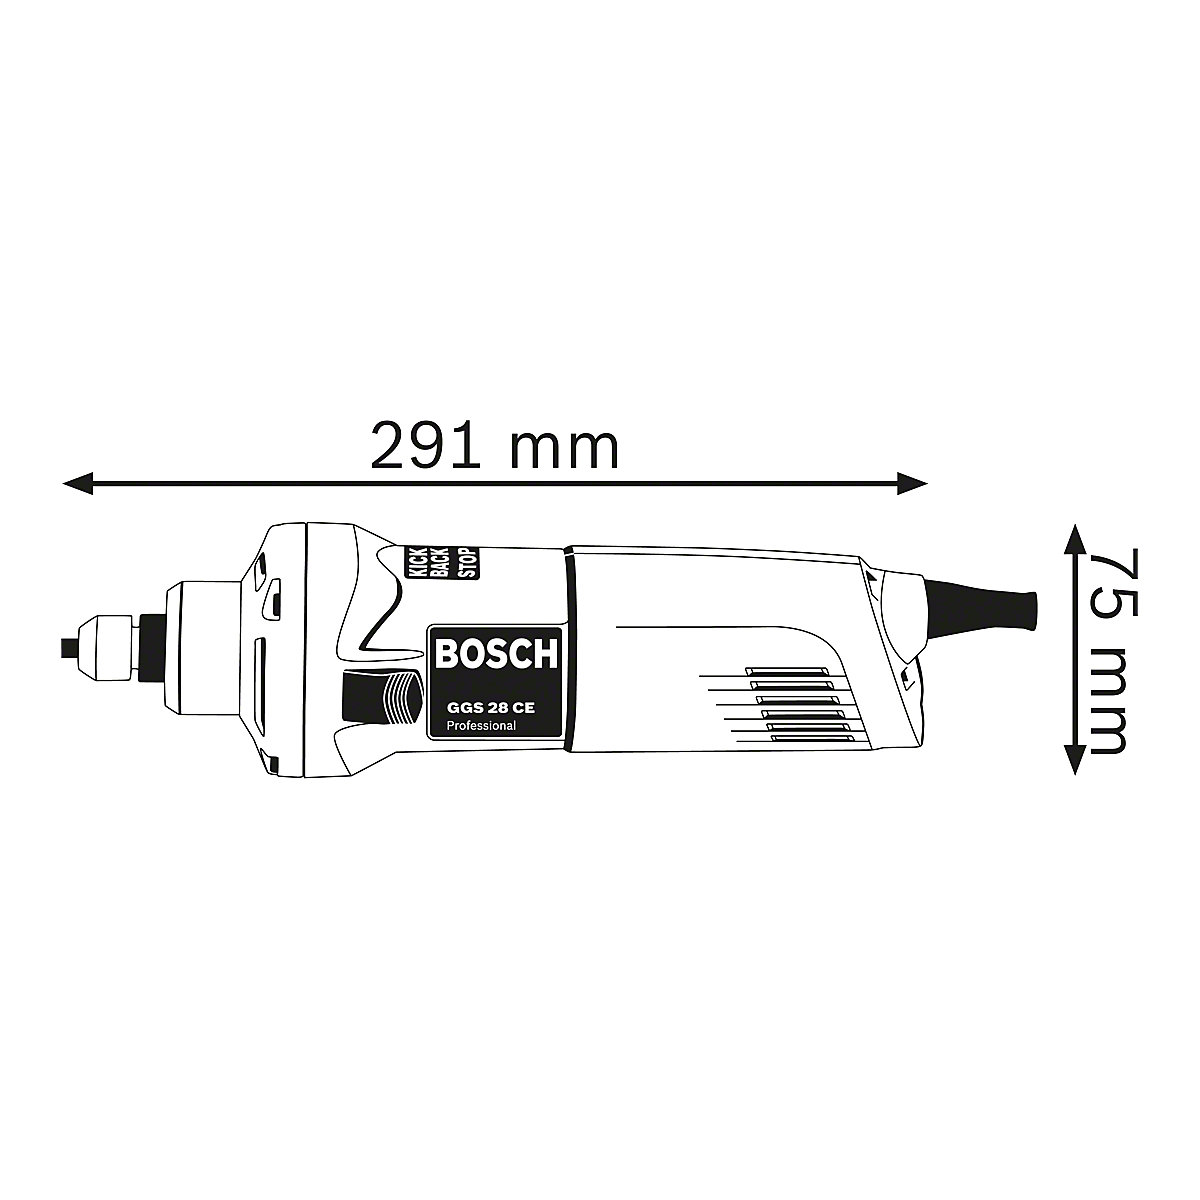 Amoladora recta GGS 28 CE Professional – Bosch (Imagen del producto 5)-4